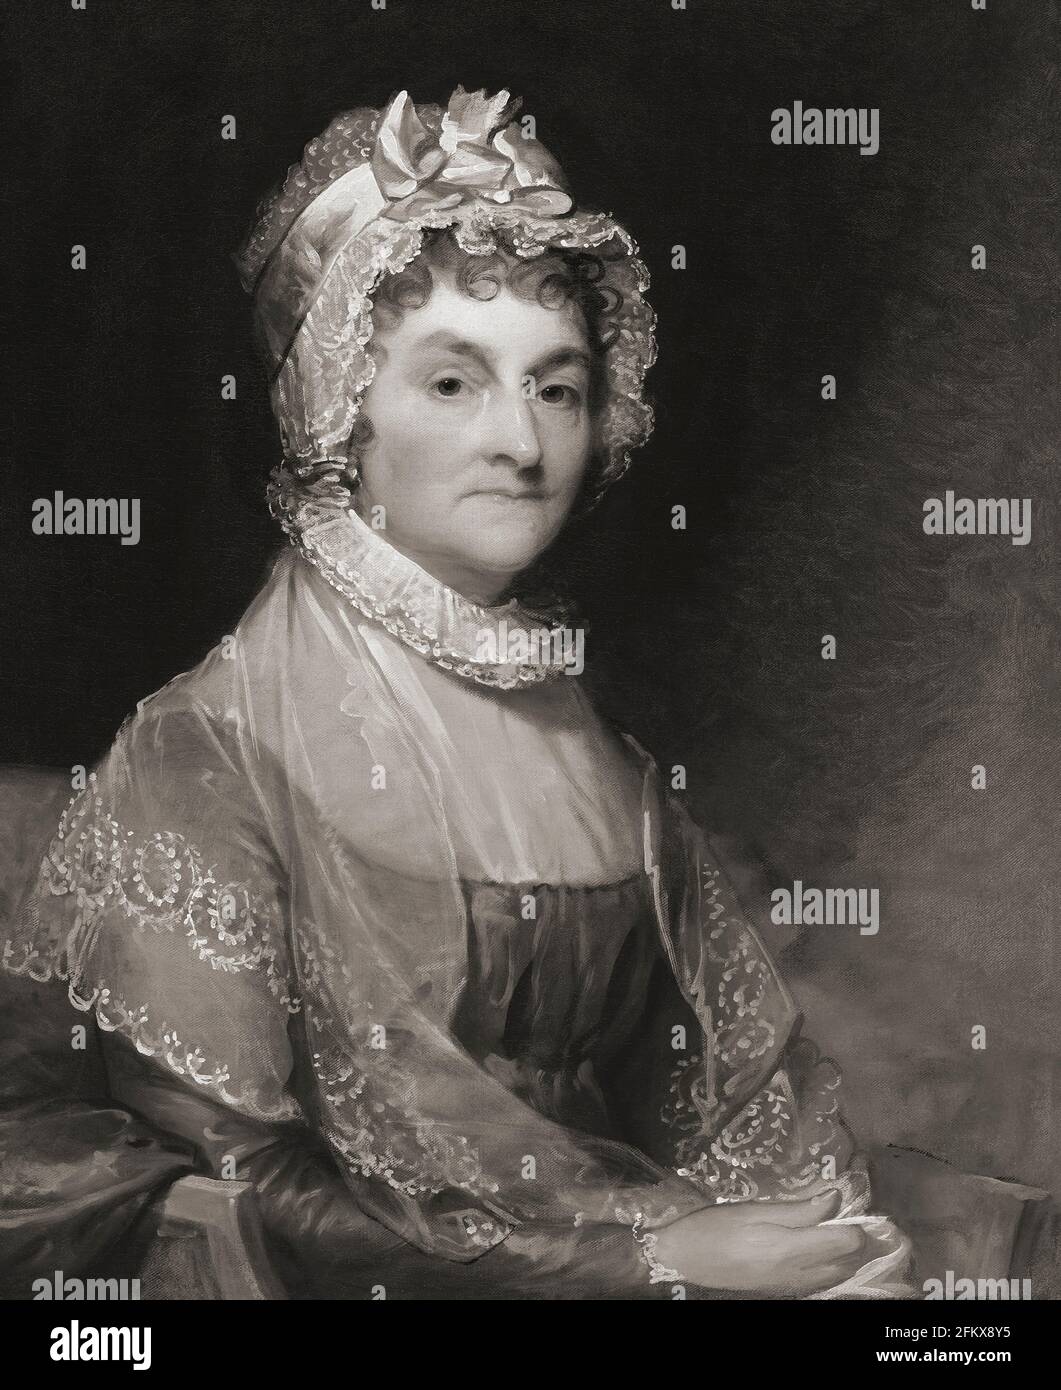 Abigail Adams, 1744 - 1818.  Wife of President John Adams and mother of John Quincy Adams. After a work by Gilbert Stuart. Stock Photo